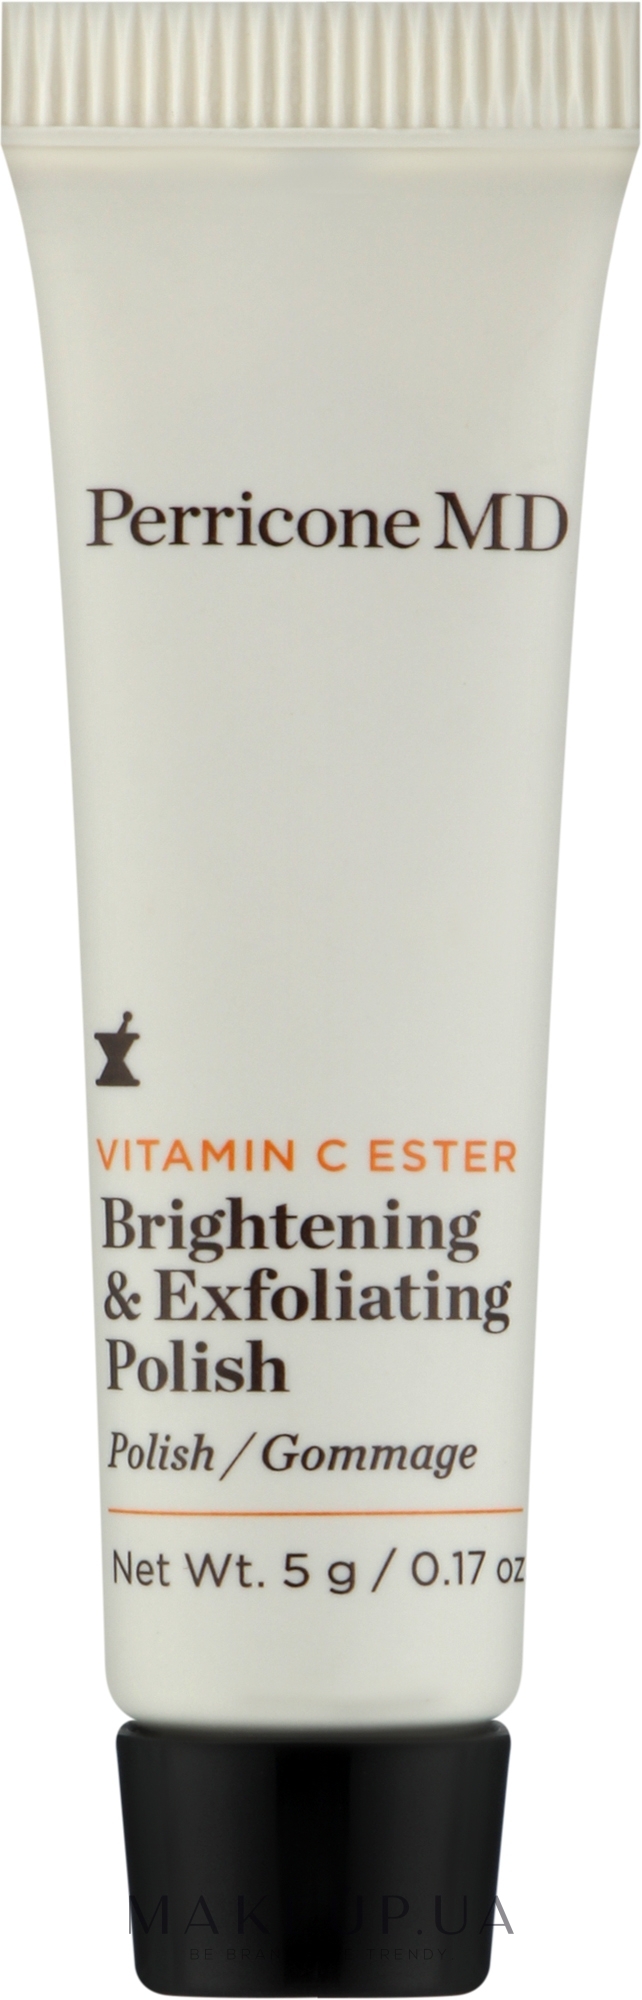 Пилинг для лица - Perricone MD Vitamin C Ester Brightening & Exfoliating Polish (пробник) — фото 5g